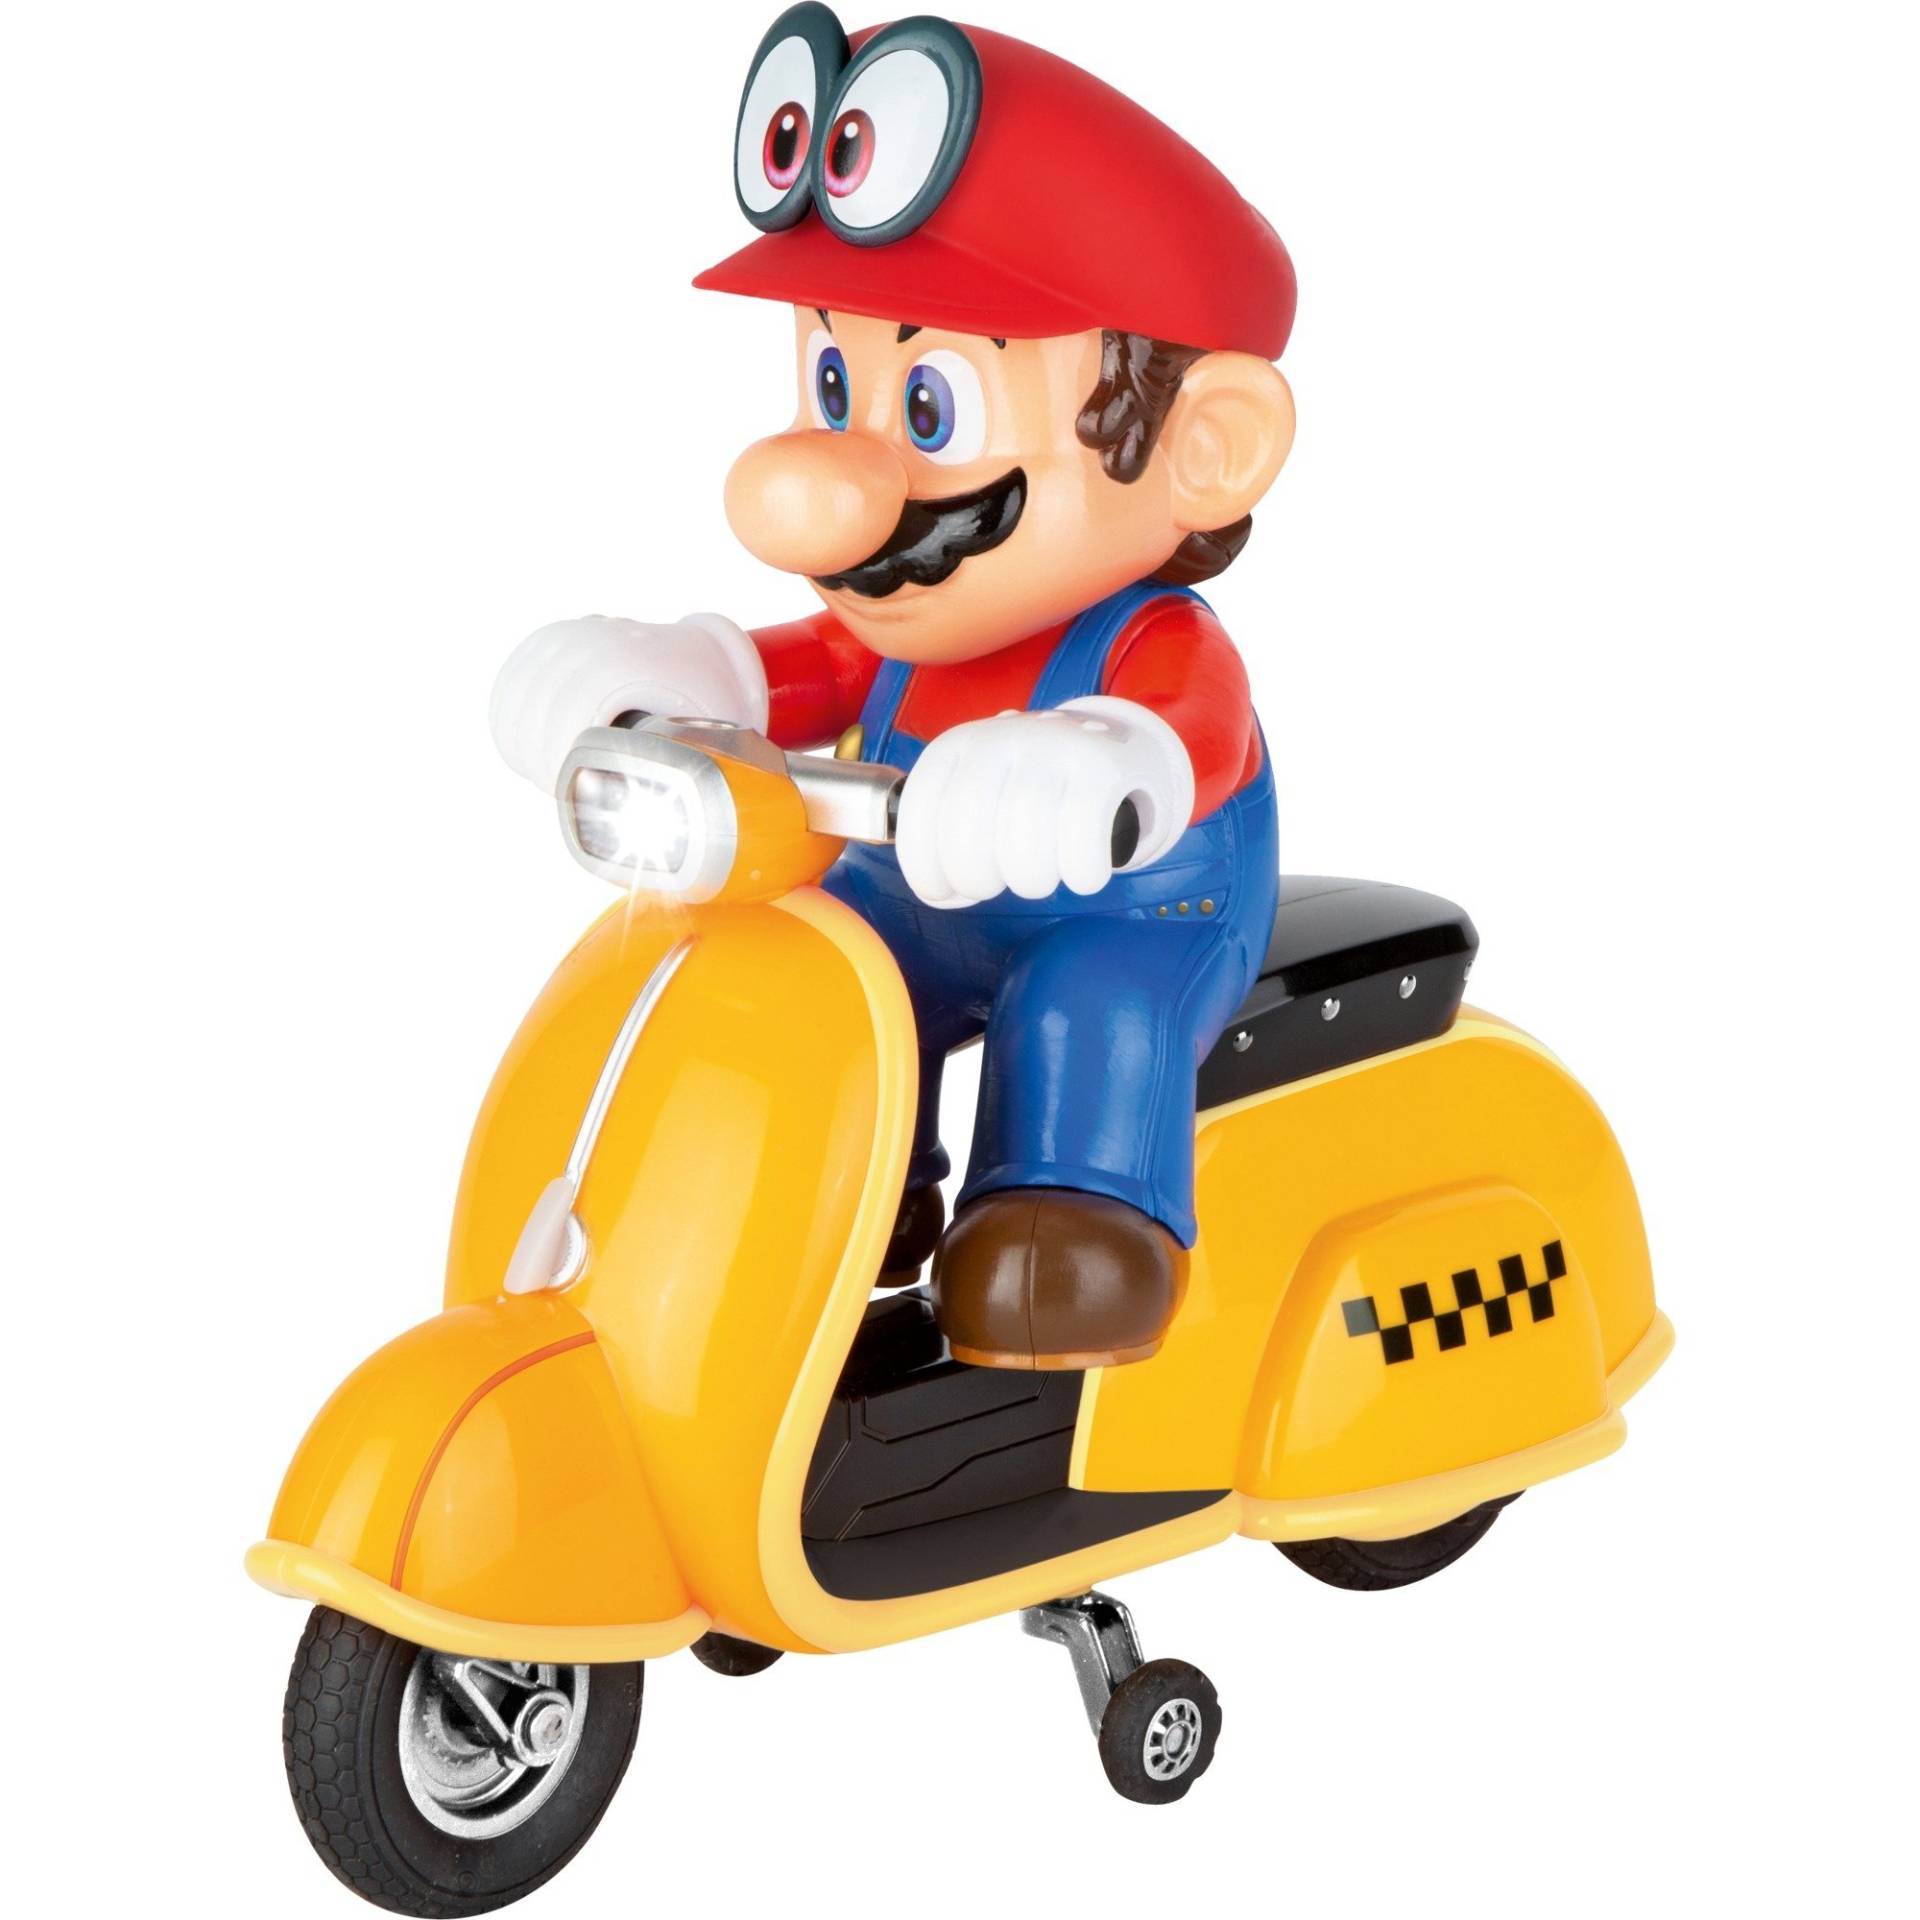 RC Super Mario Odyssey Scooter - Mario von Carrera